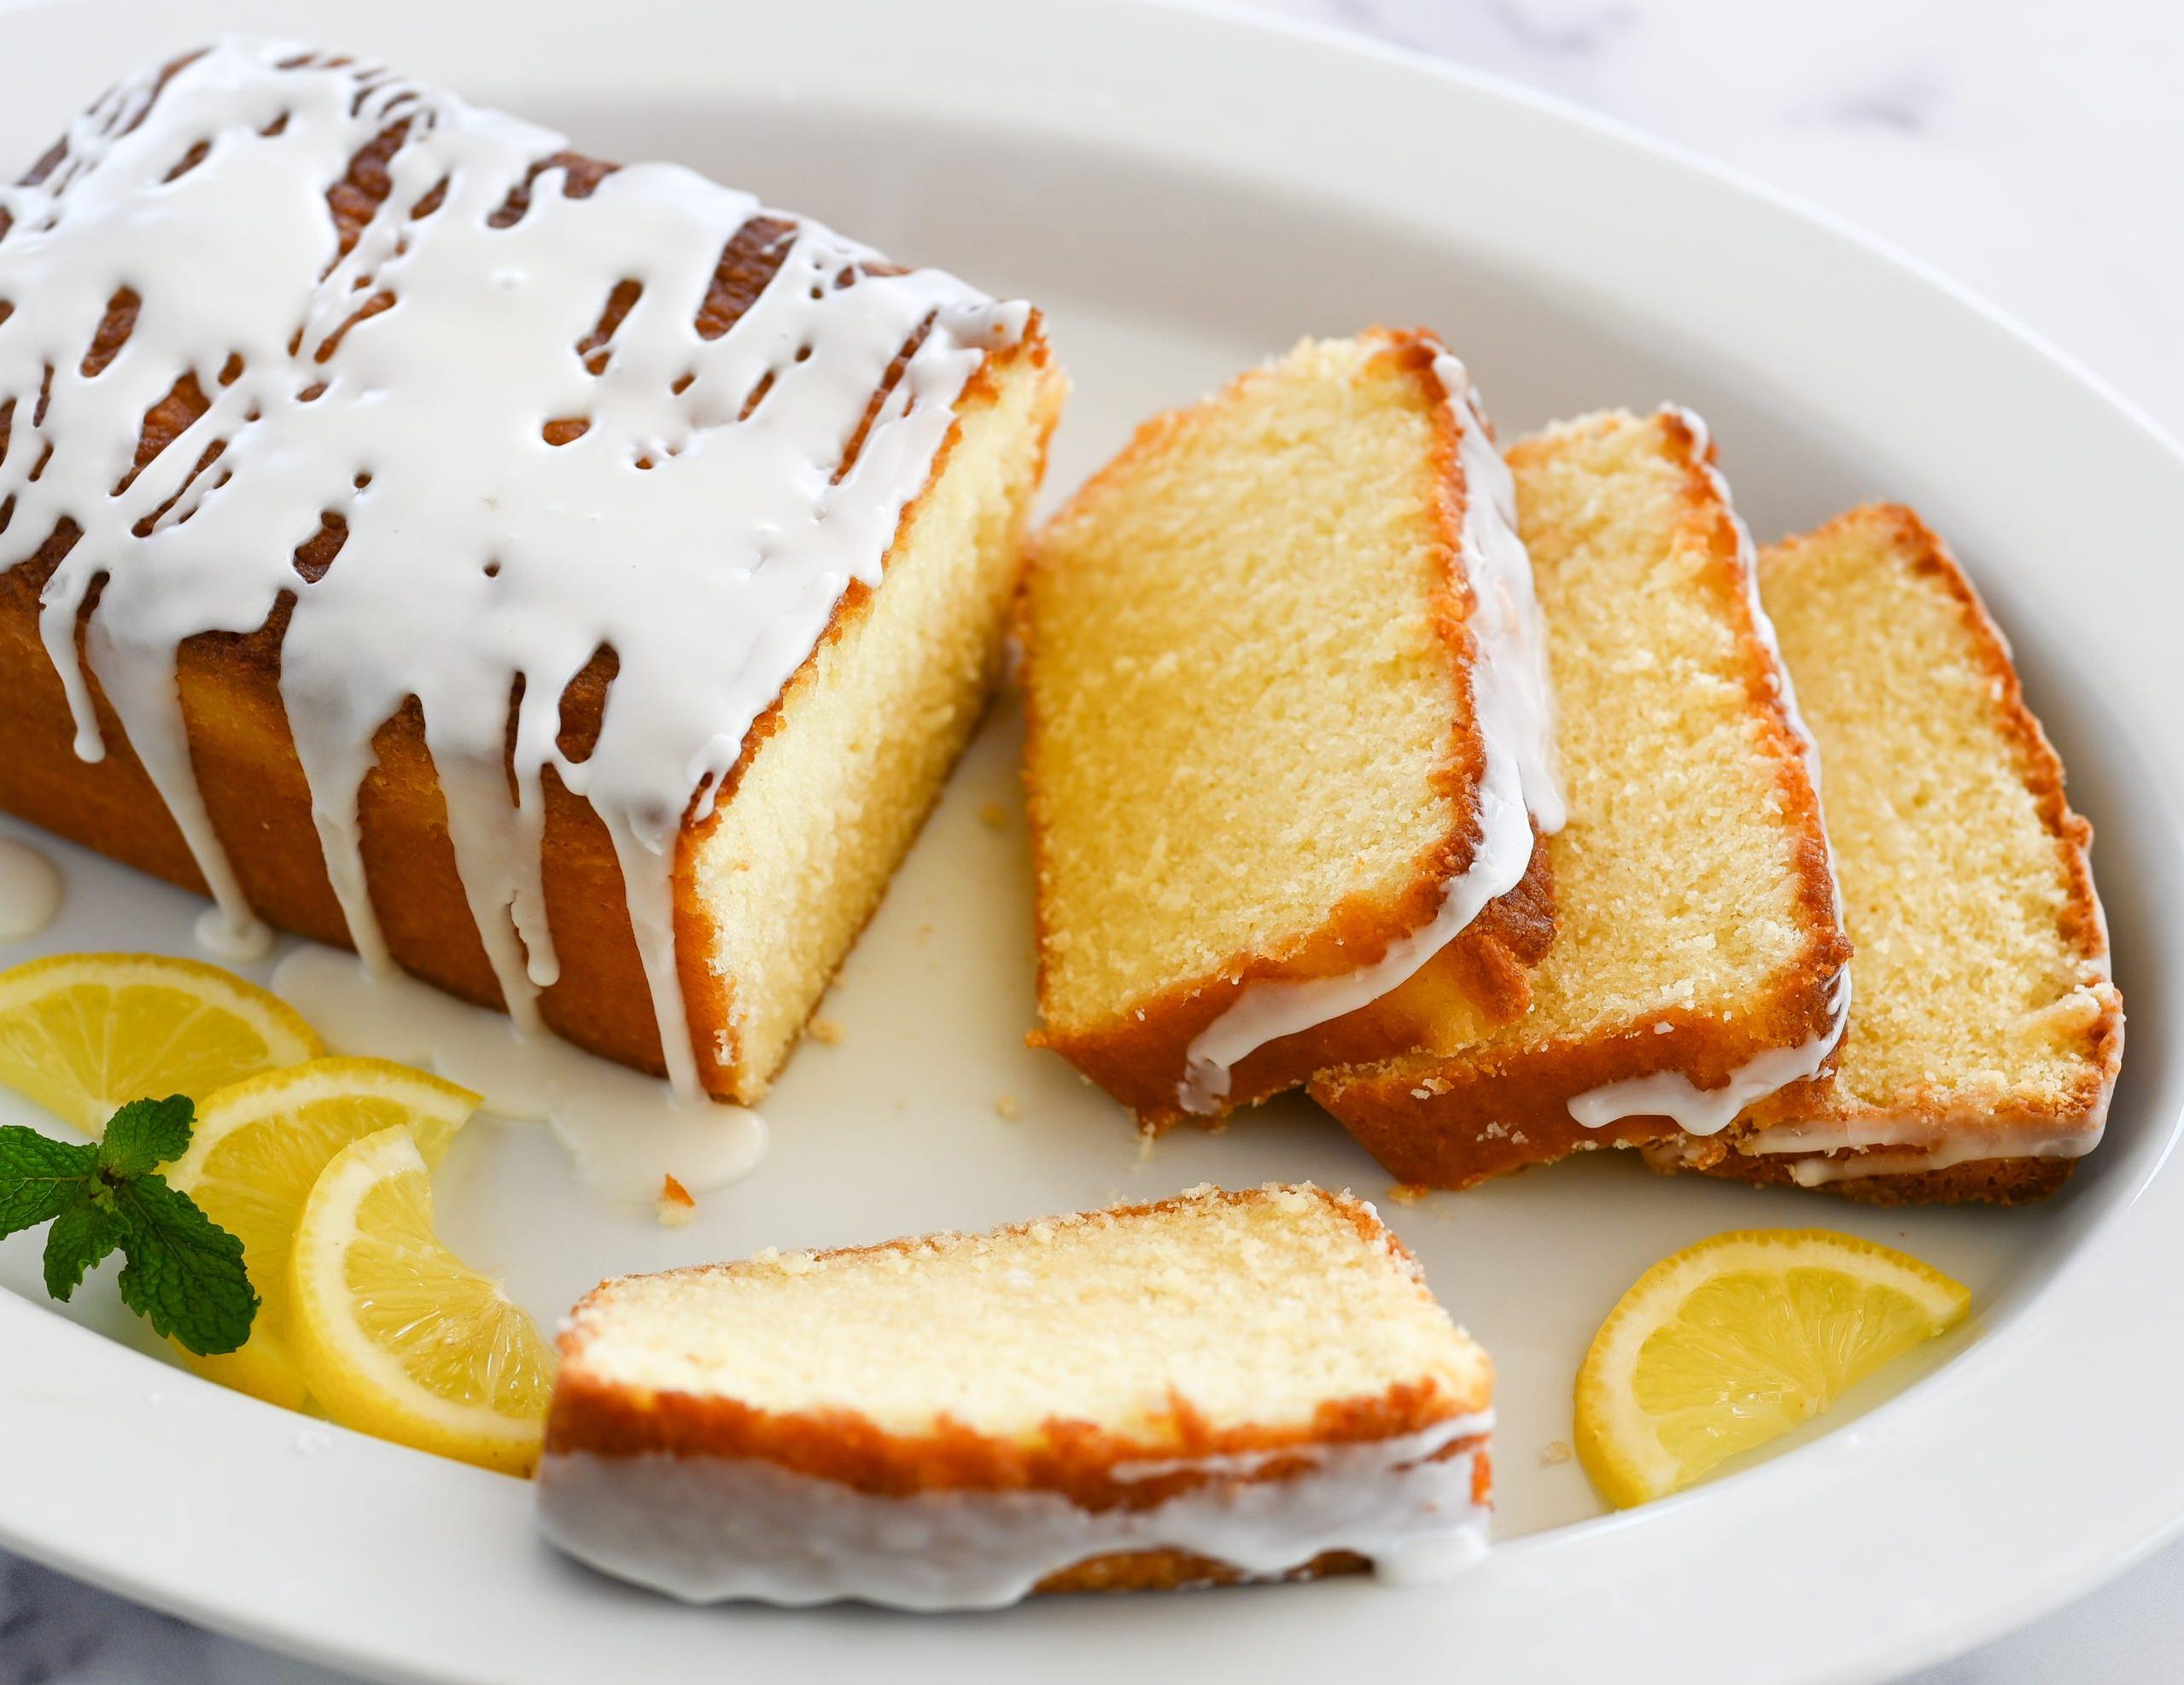 Delicious Lemon Pound Cake Recipe to Satisfy Your Cravings